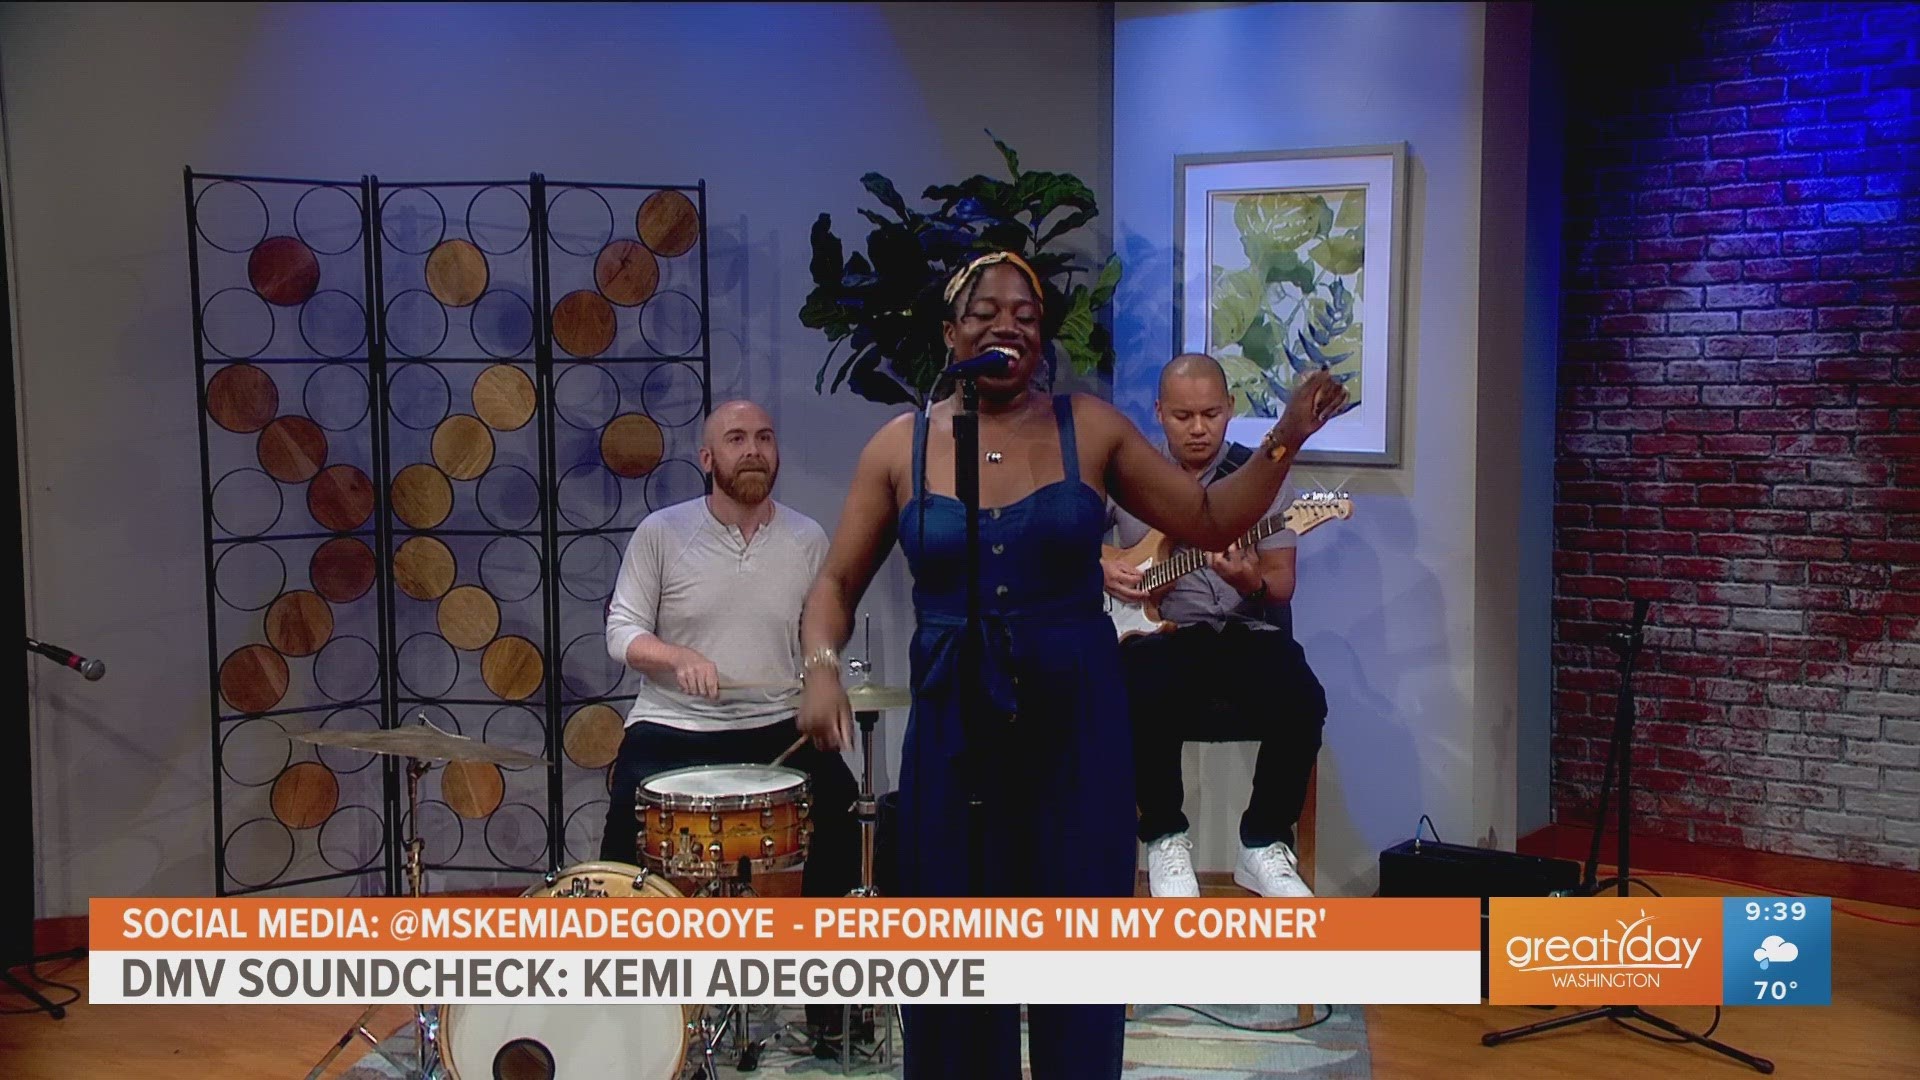 Kemi Adegoroye performs 'In My Corner' in the DMV Soundcheck on Great Day Washington.